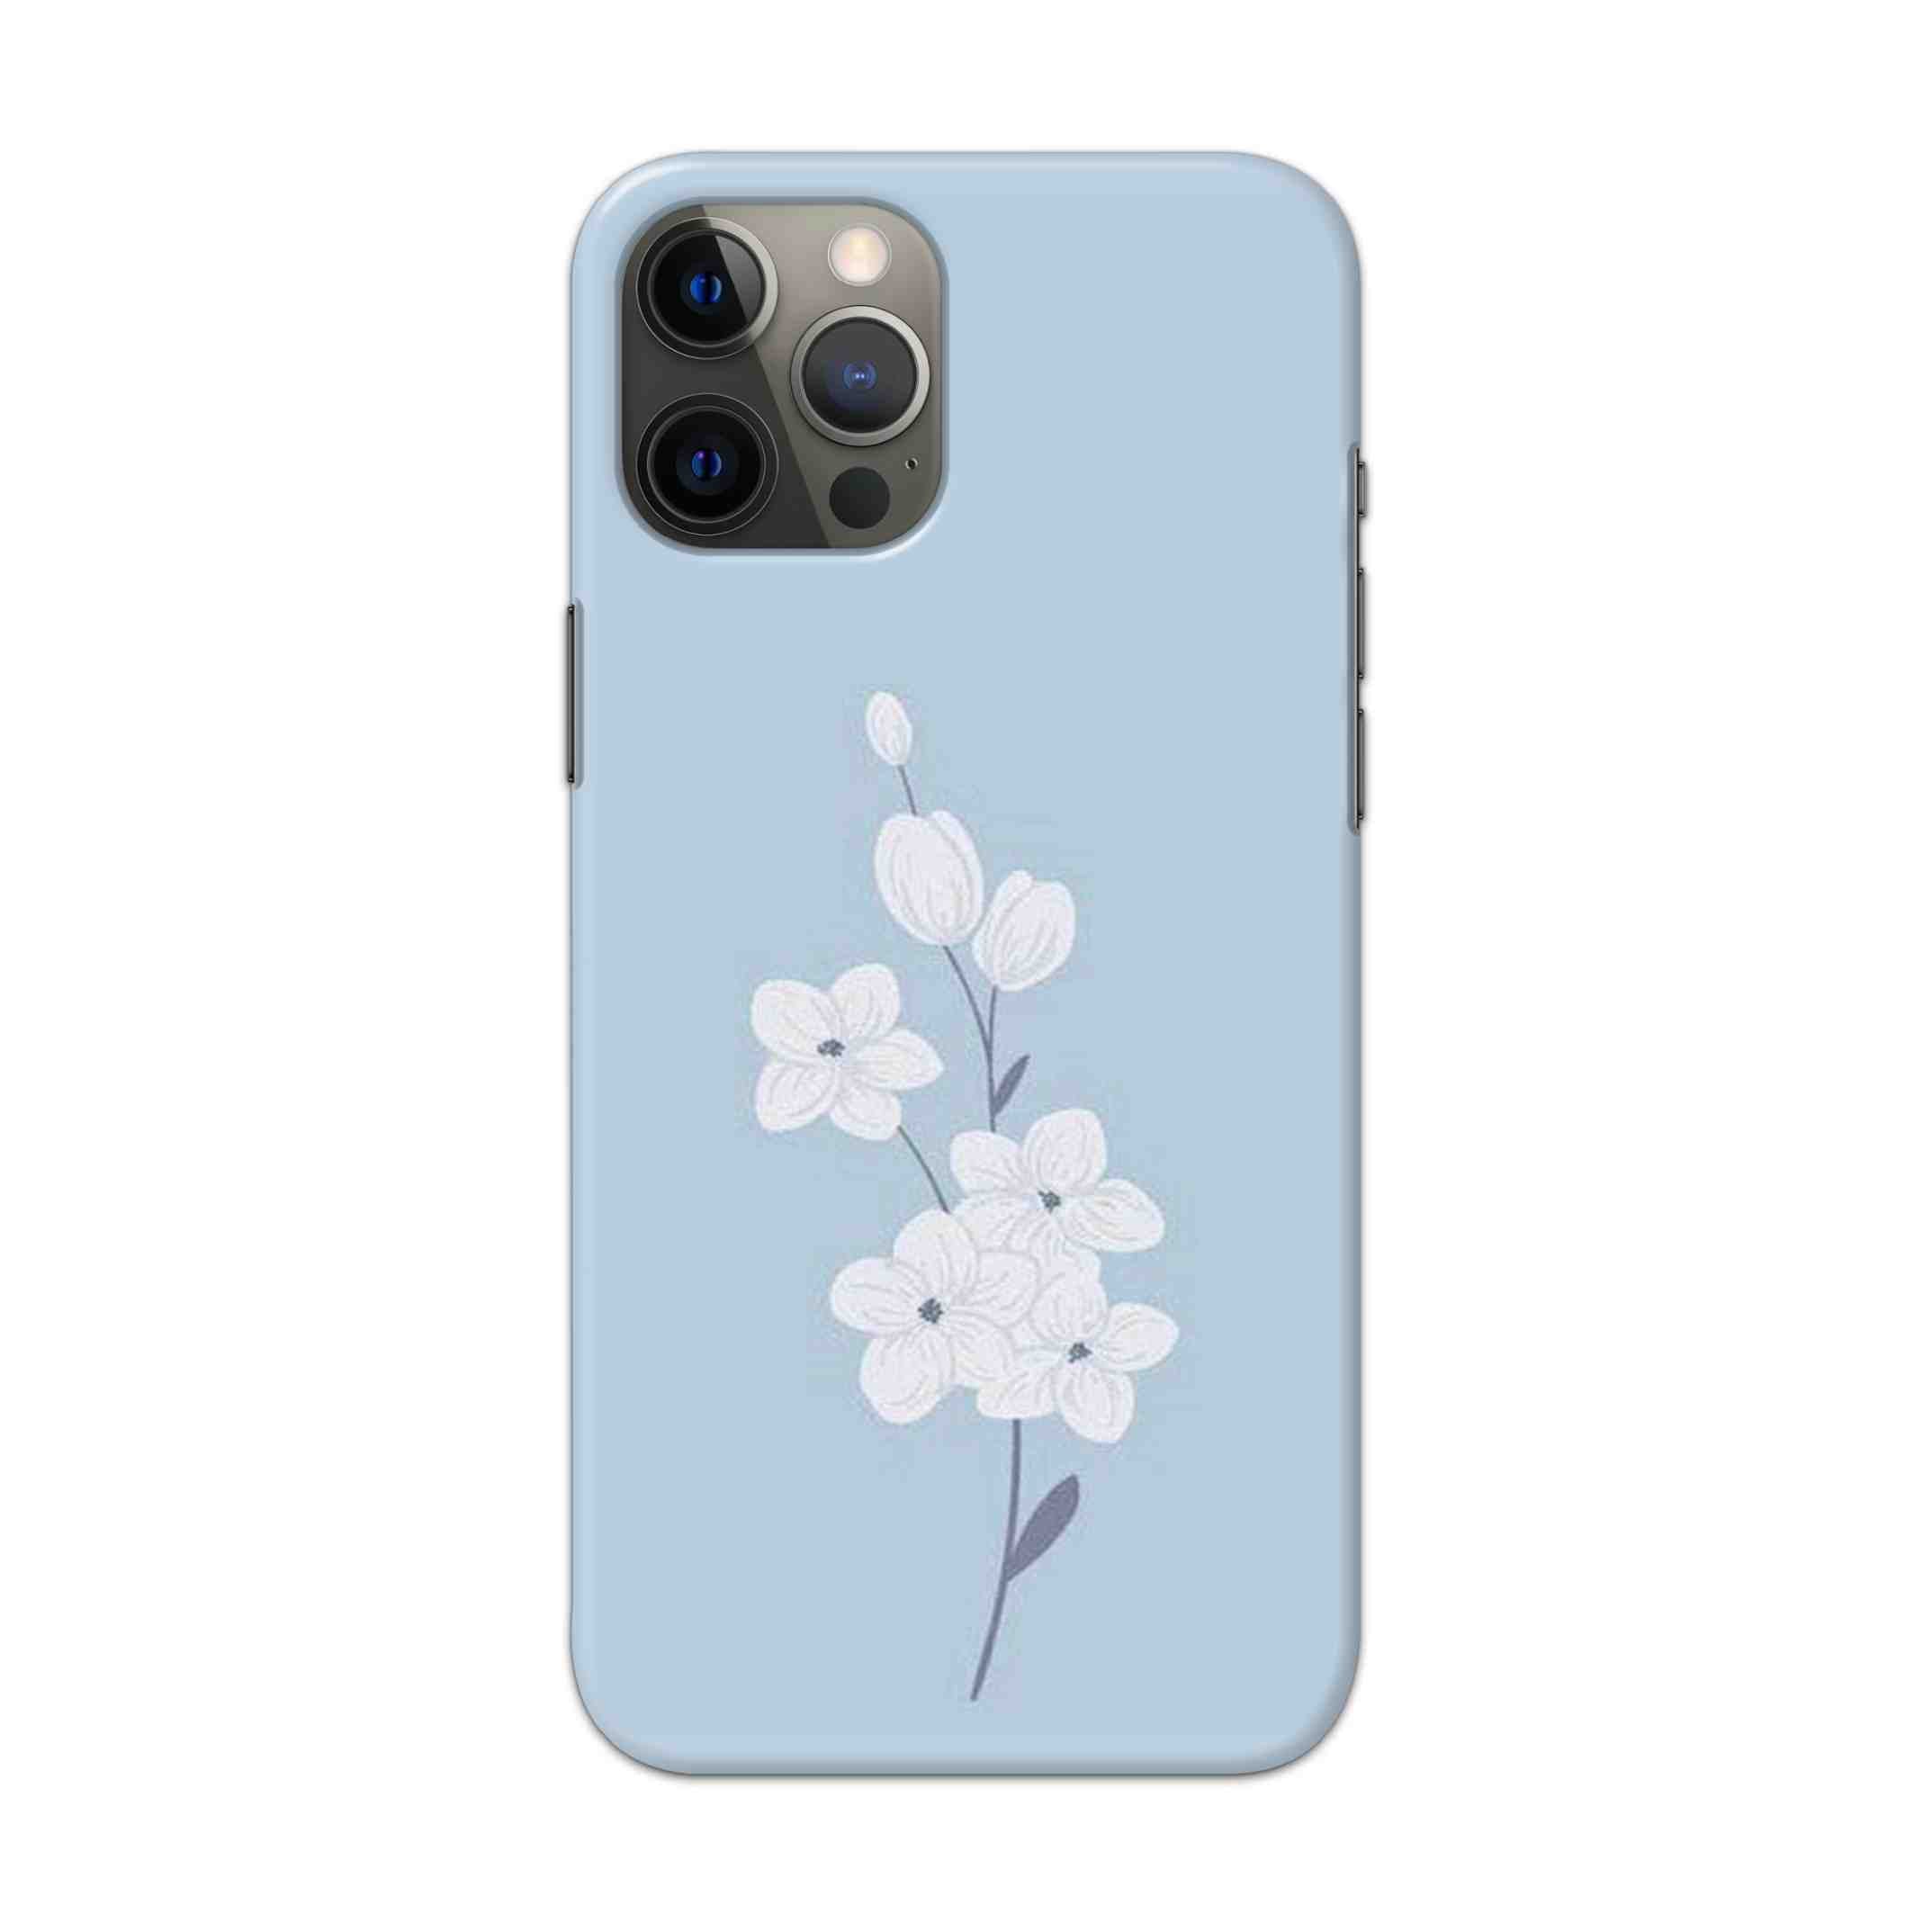 Buy White Flower Hard Back Mobile Phone Case Cover For Apple iPhone 12 pro Online